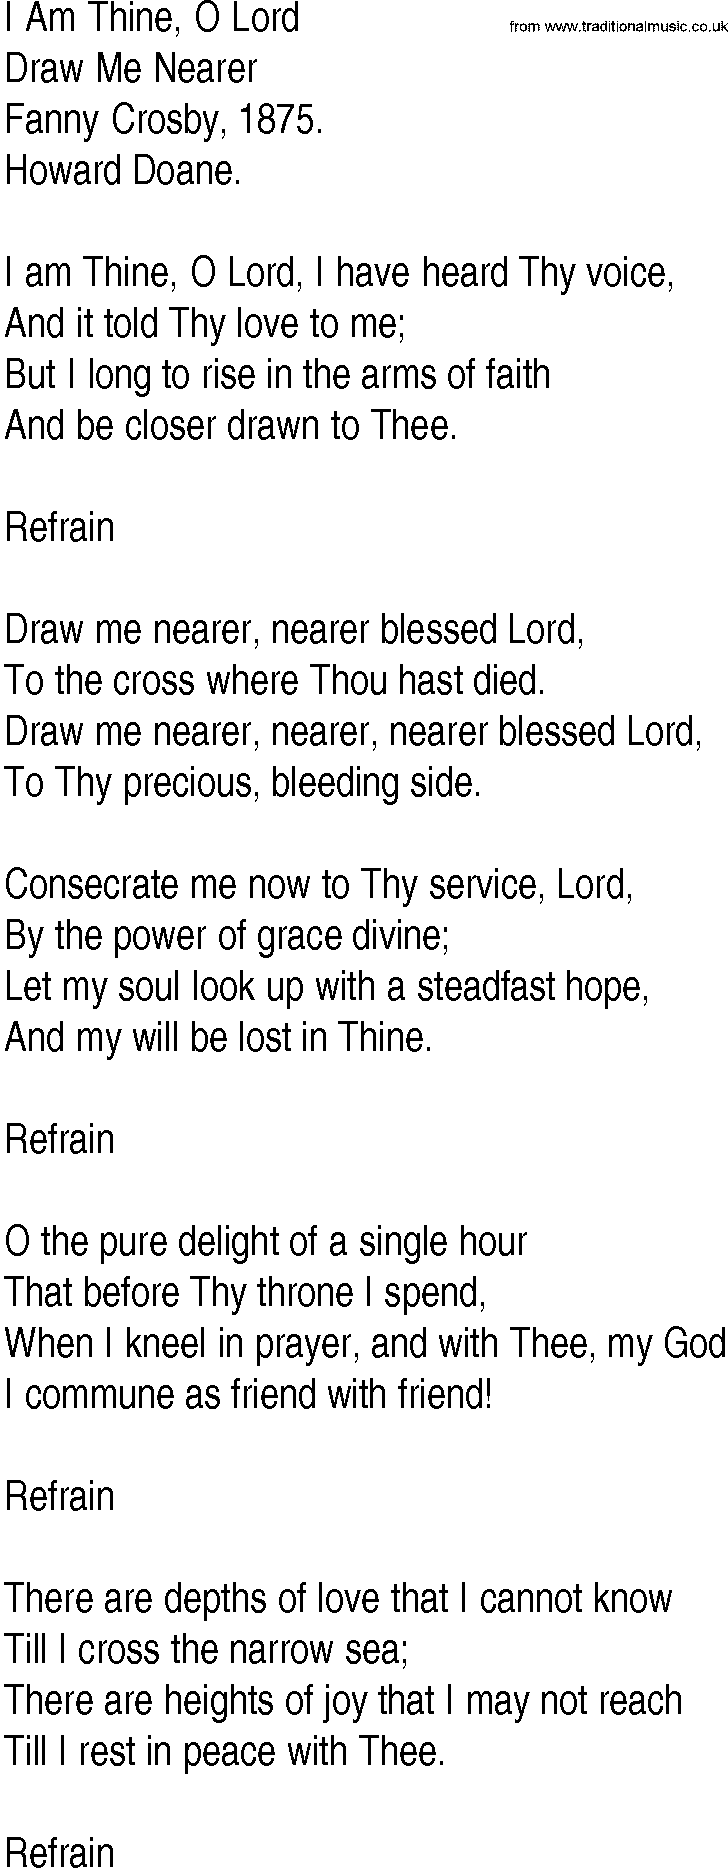 Hymn and Gospel Song: I Am Thine, O Lord by Fanny Crosby lyrics